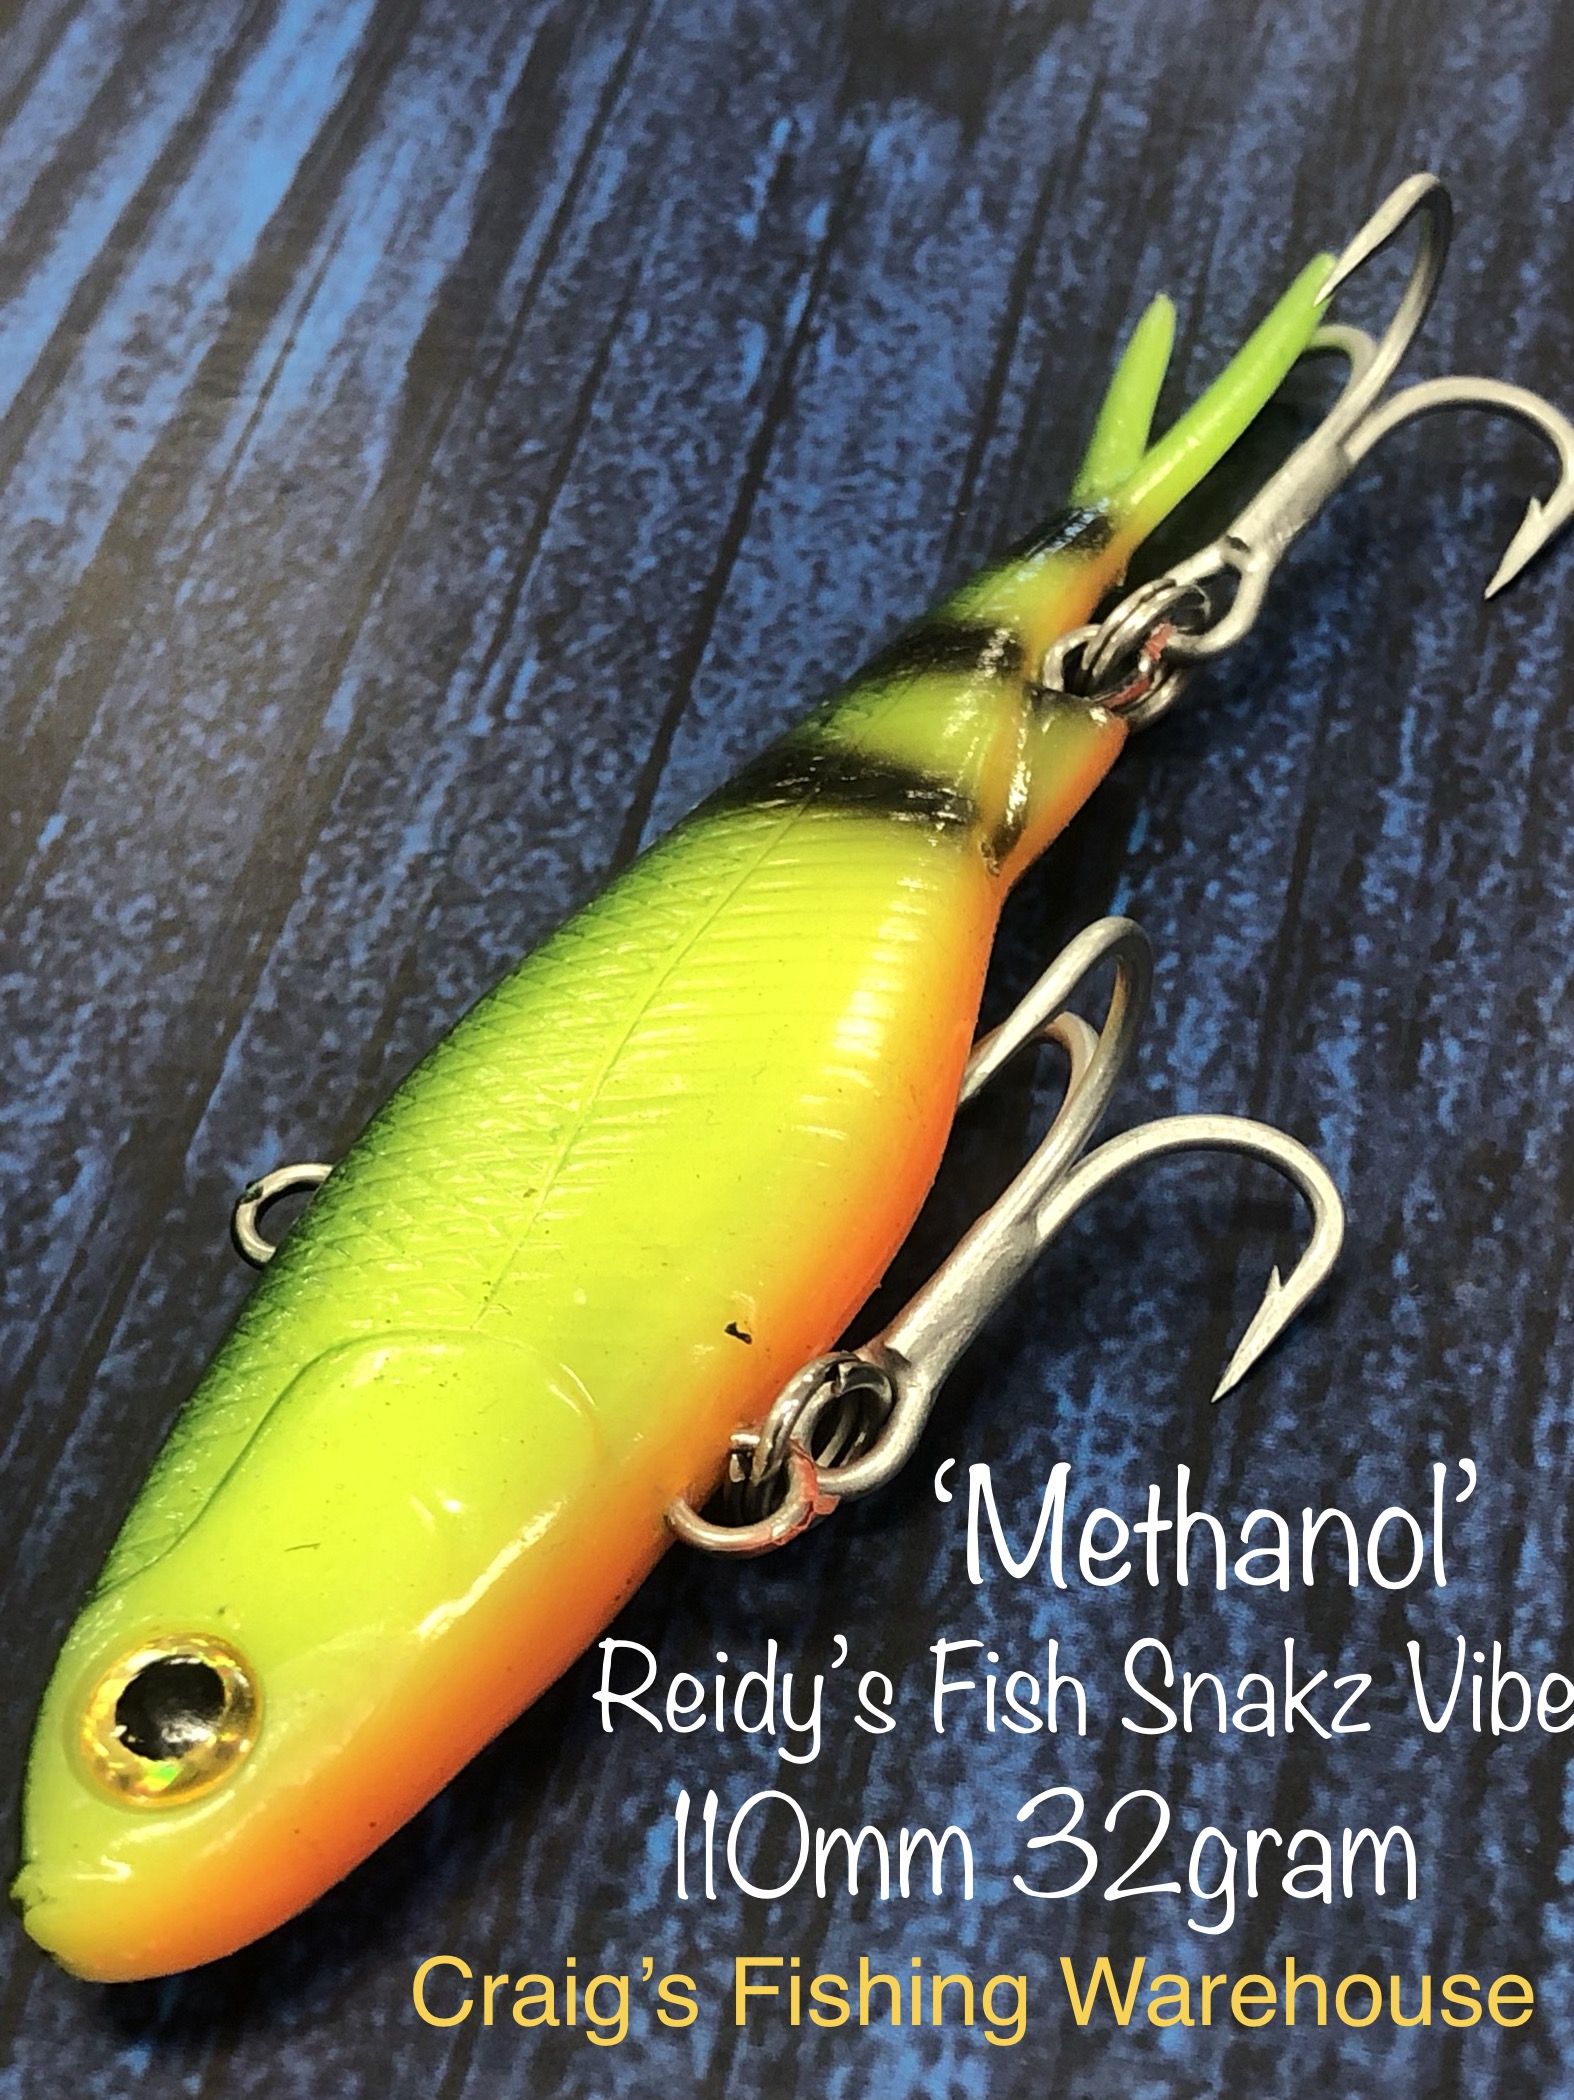 Reidy's Fish Snakz Vibe 110mm 'Methanol